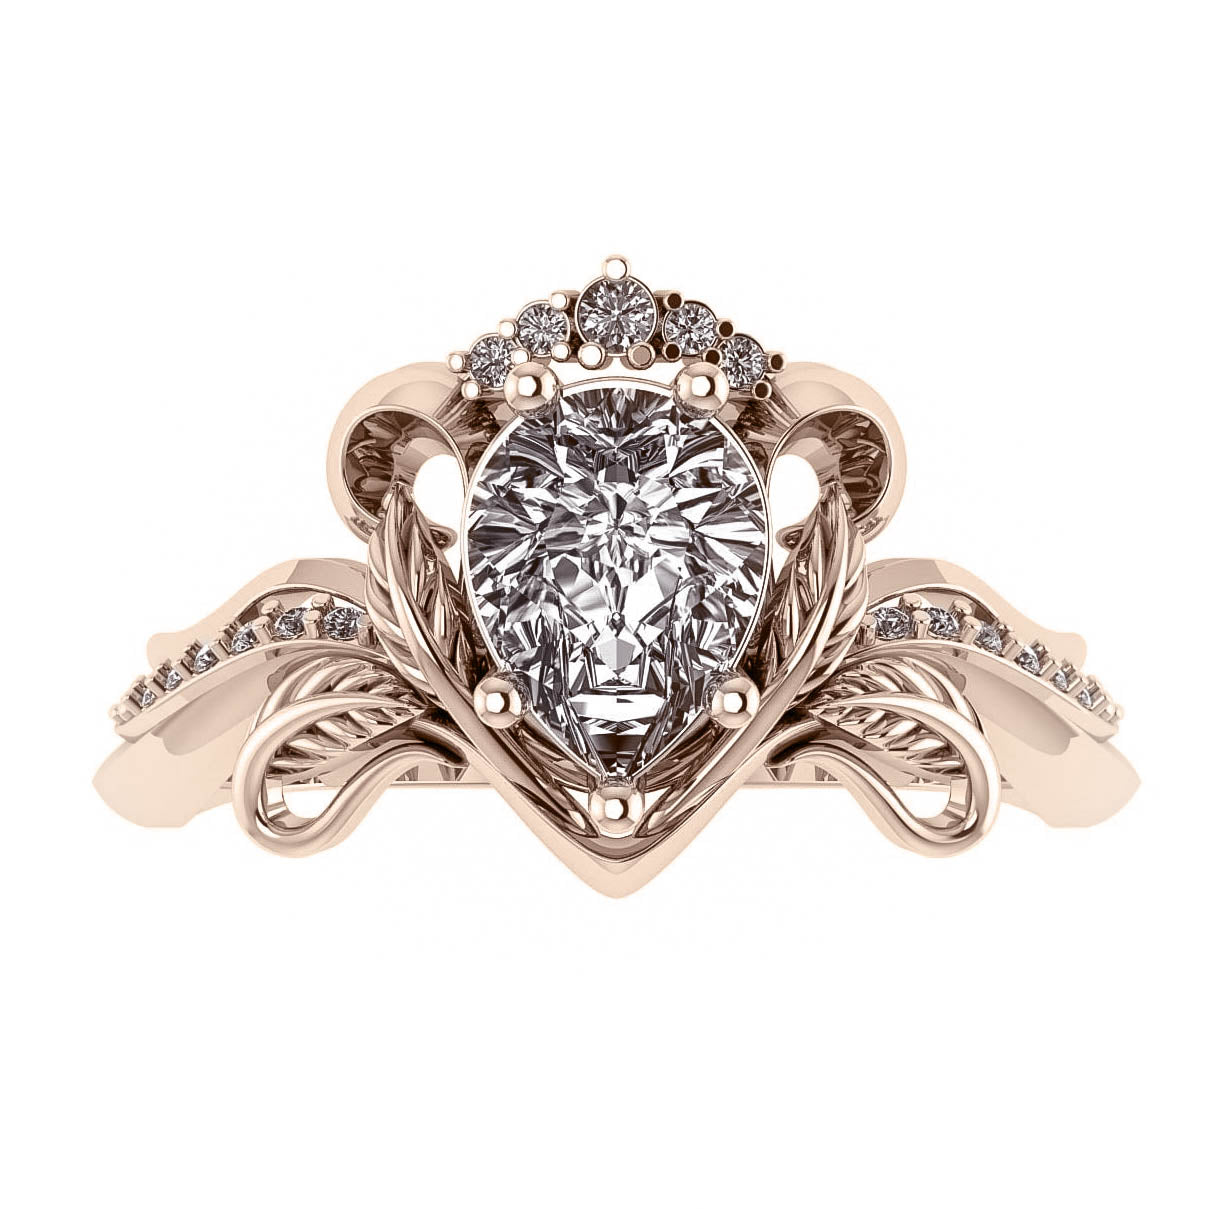 Faunus | custom engagement ring with pear cut gemstone 8x6 mm - Eden Garden Jewelry™